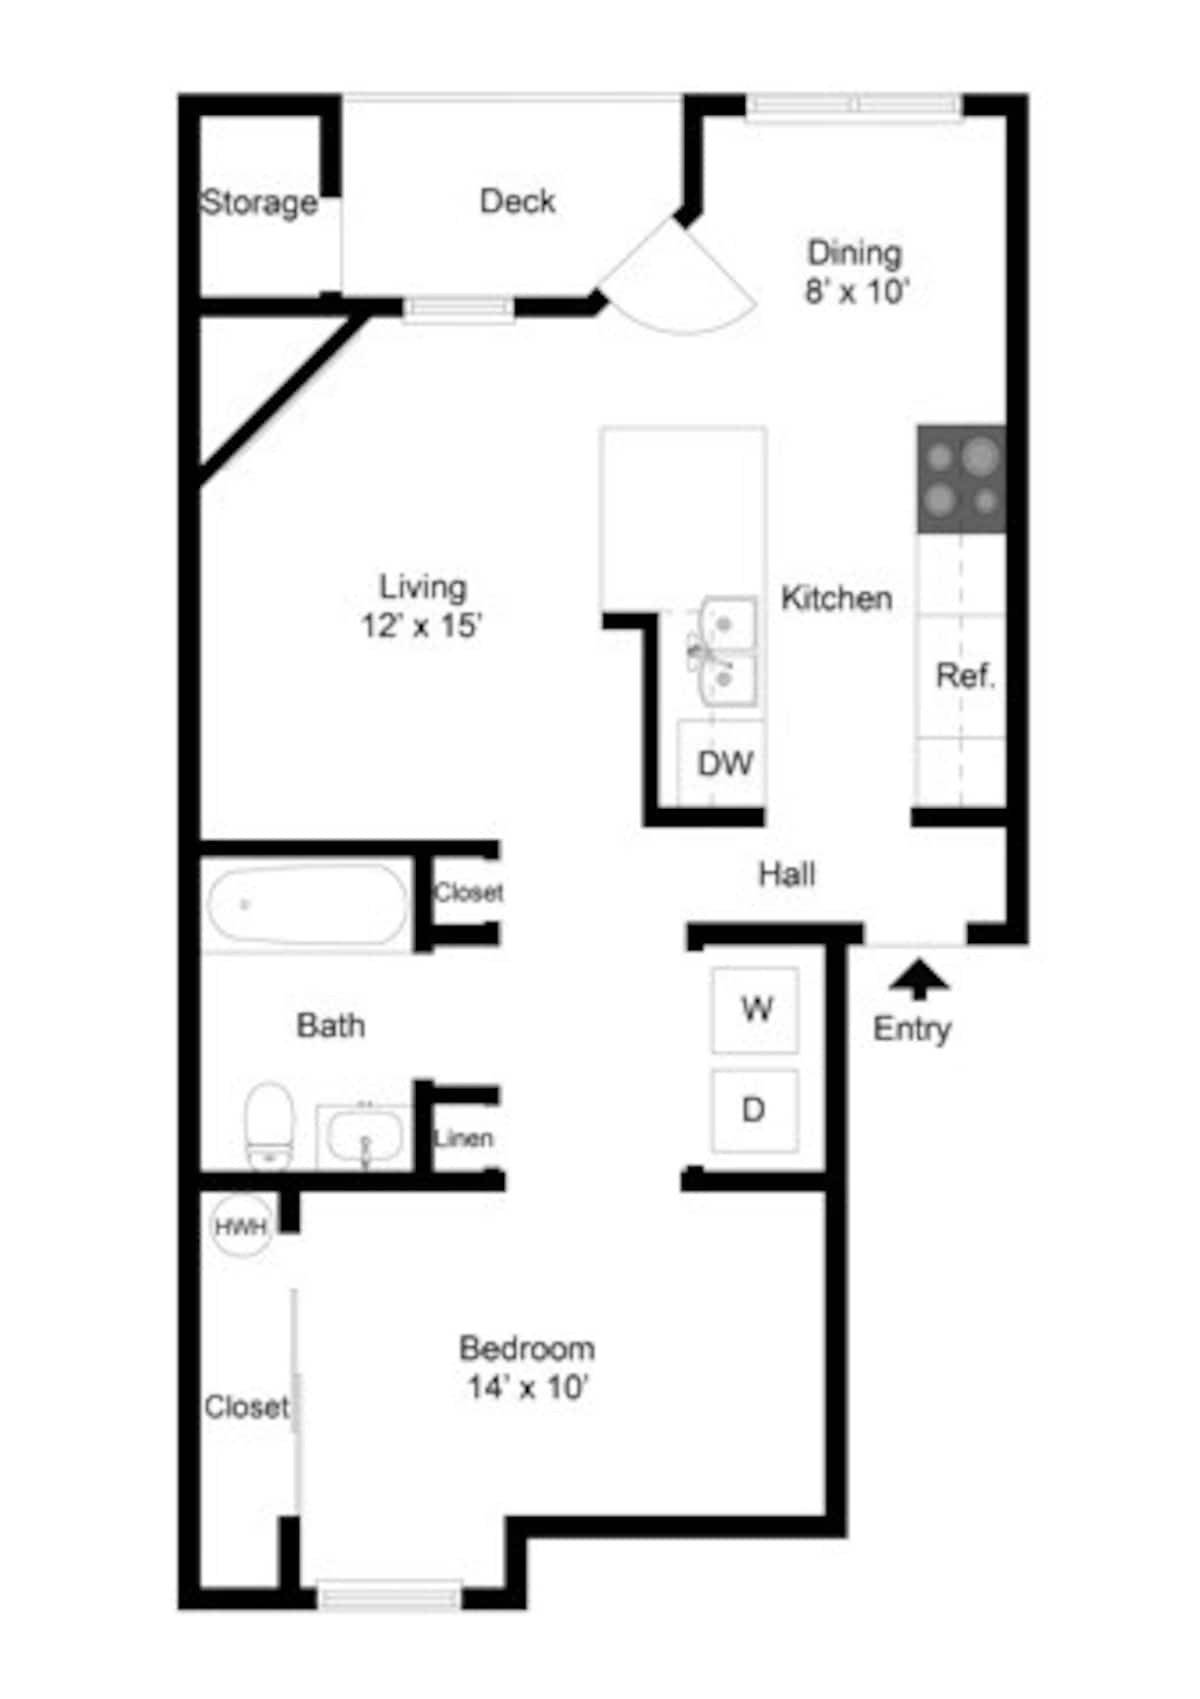 Floorplan diagram for One Bedroom One Bath (729 SF), showing 1 bedroom